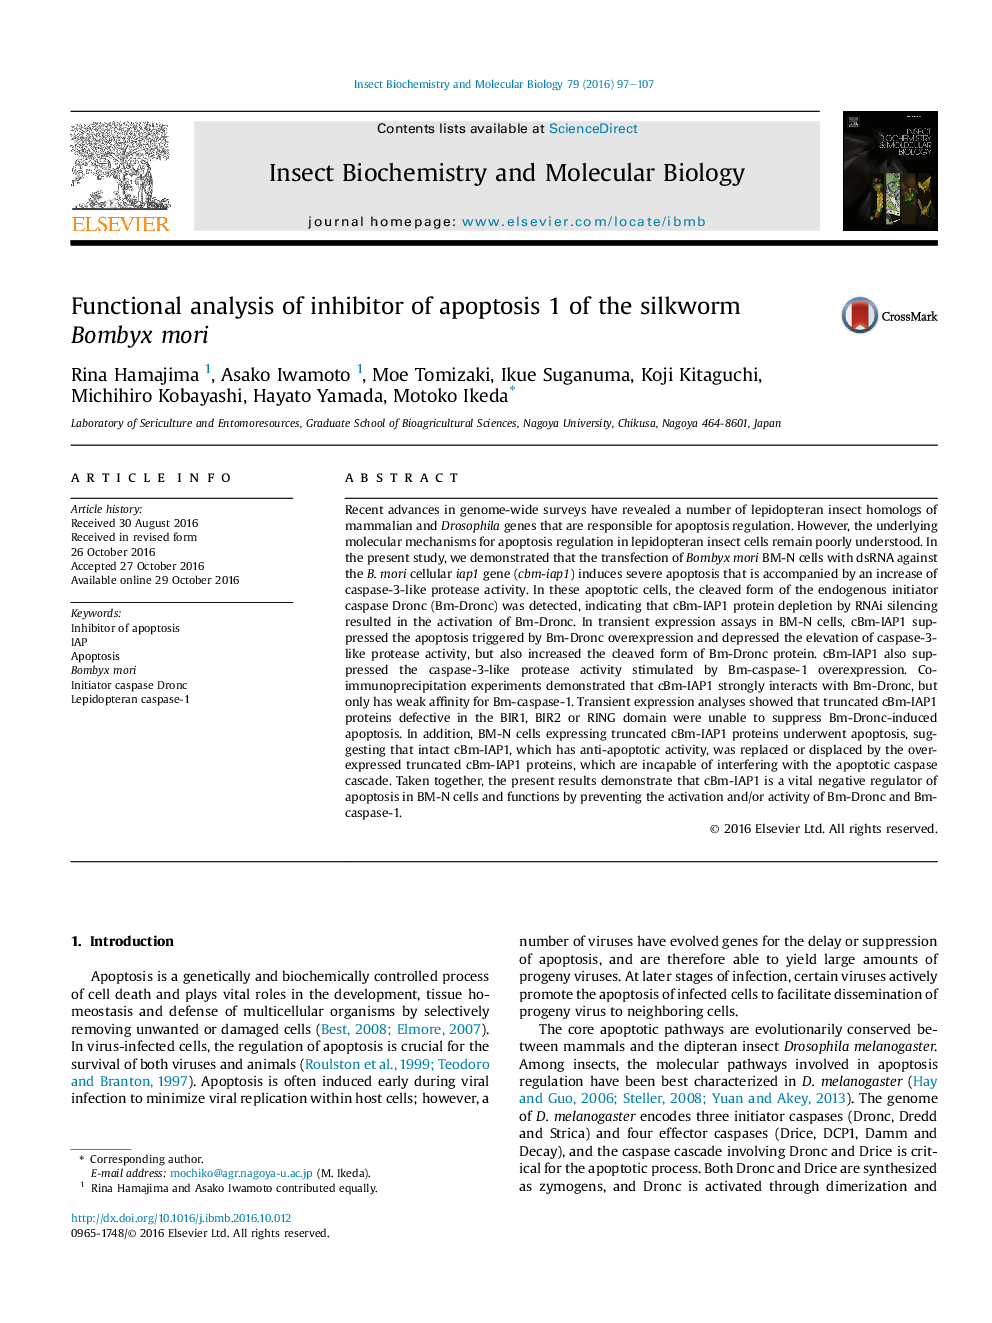 Functional analysis of inhibitor of apoptosis 1 of the silkworm BombyxÂ mori